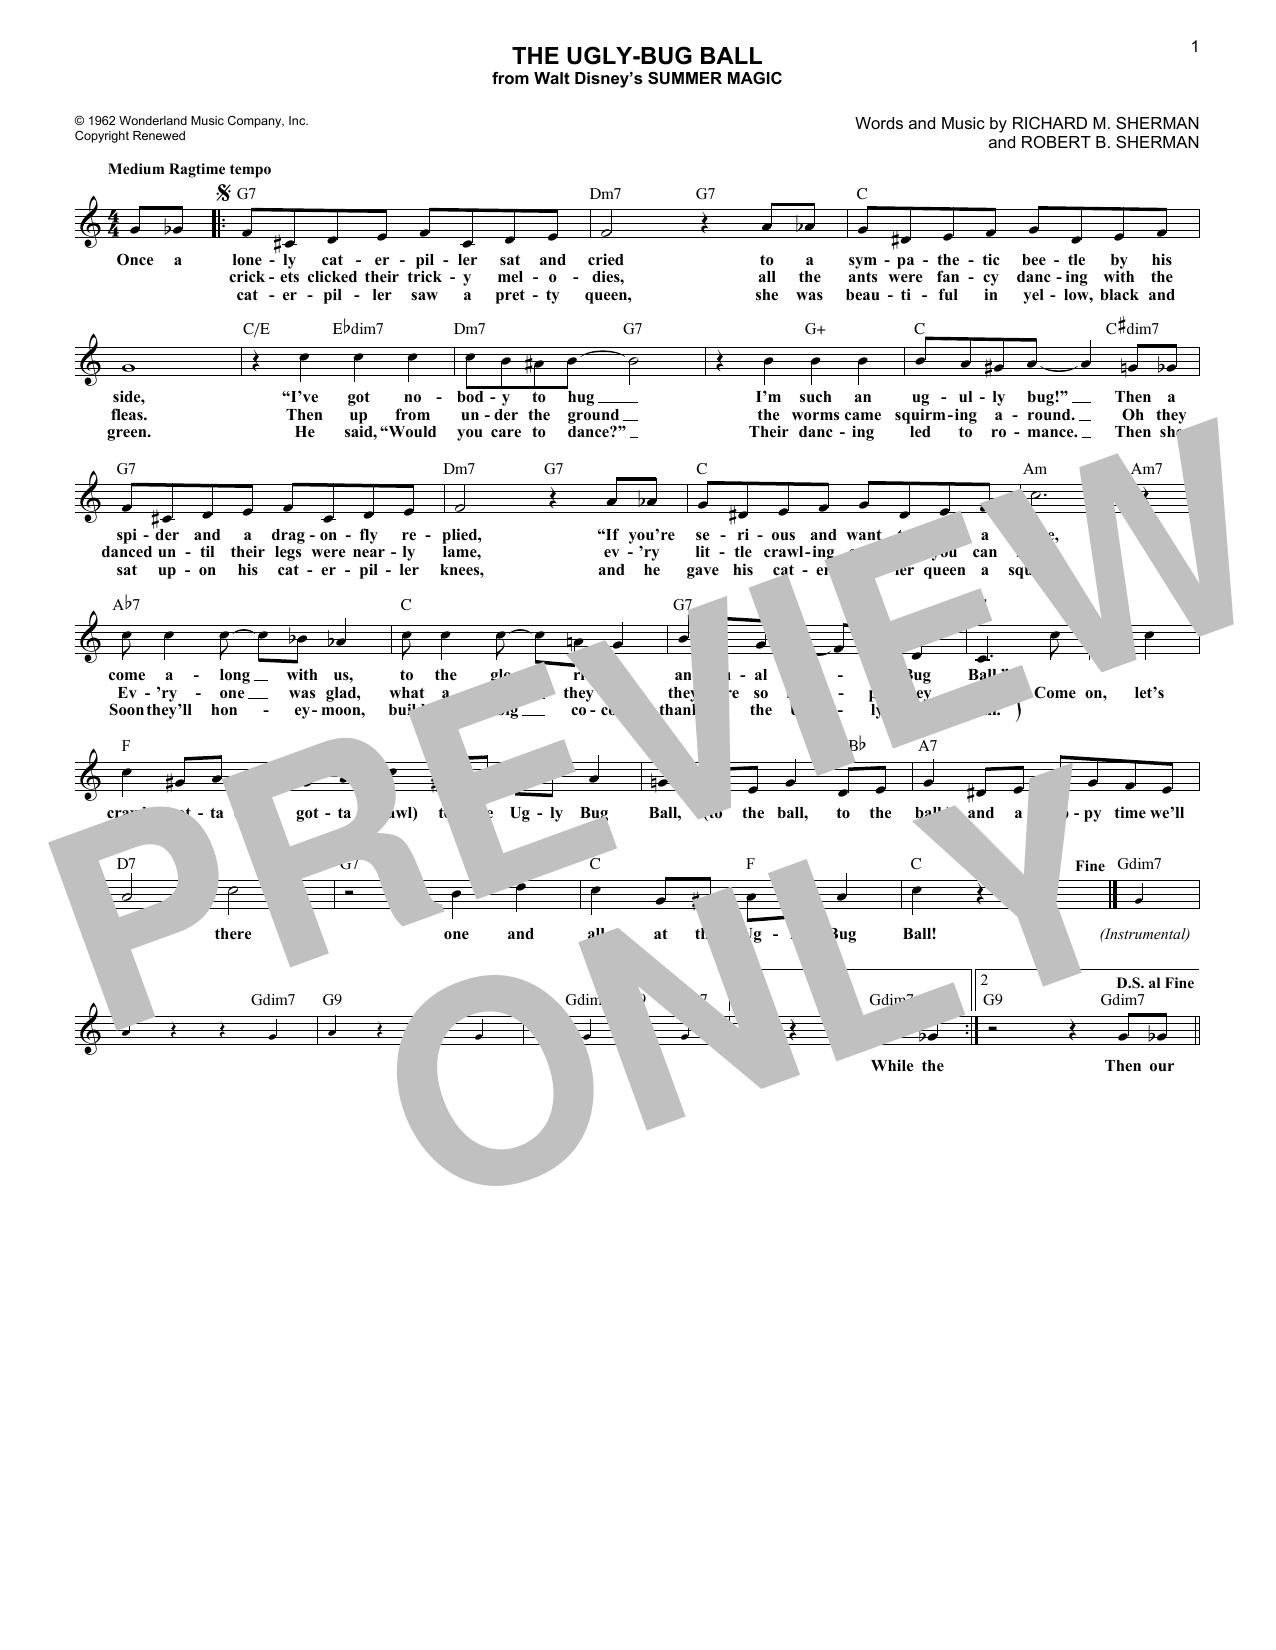 Richard M. Sherman The Ugly-Bug Ball Sheet Music Notes & Chords for Melody Line, Lyrics & Chords - Download or Print PDF